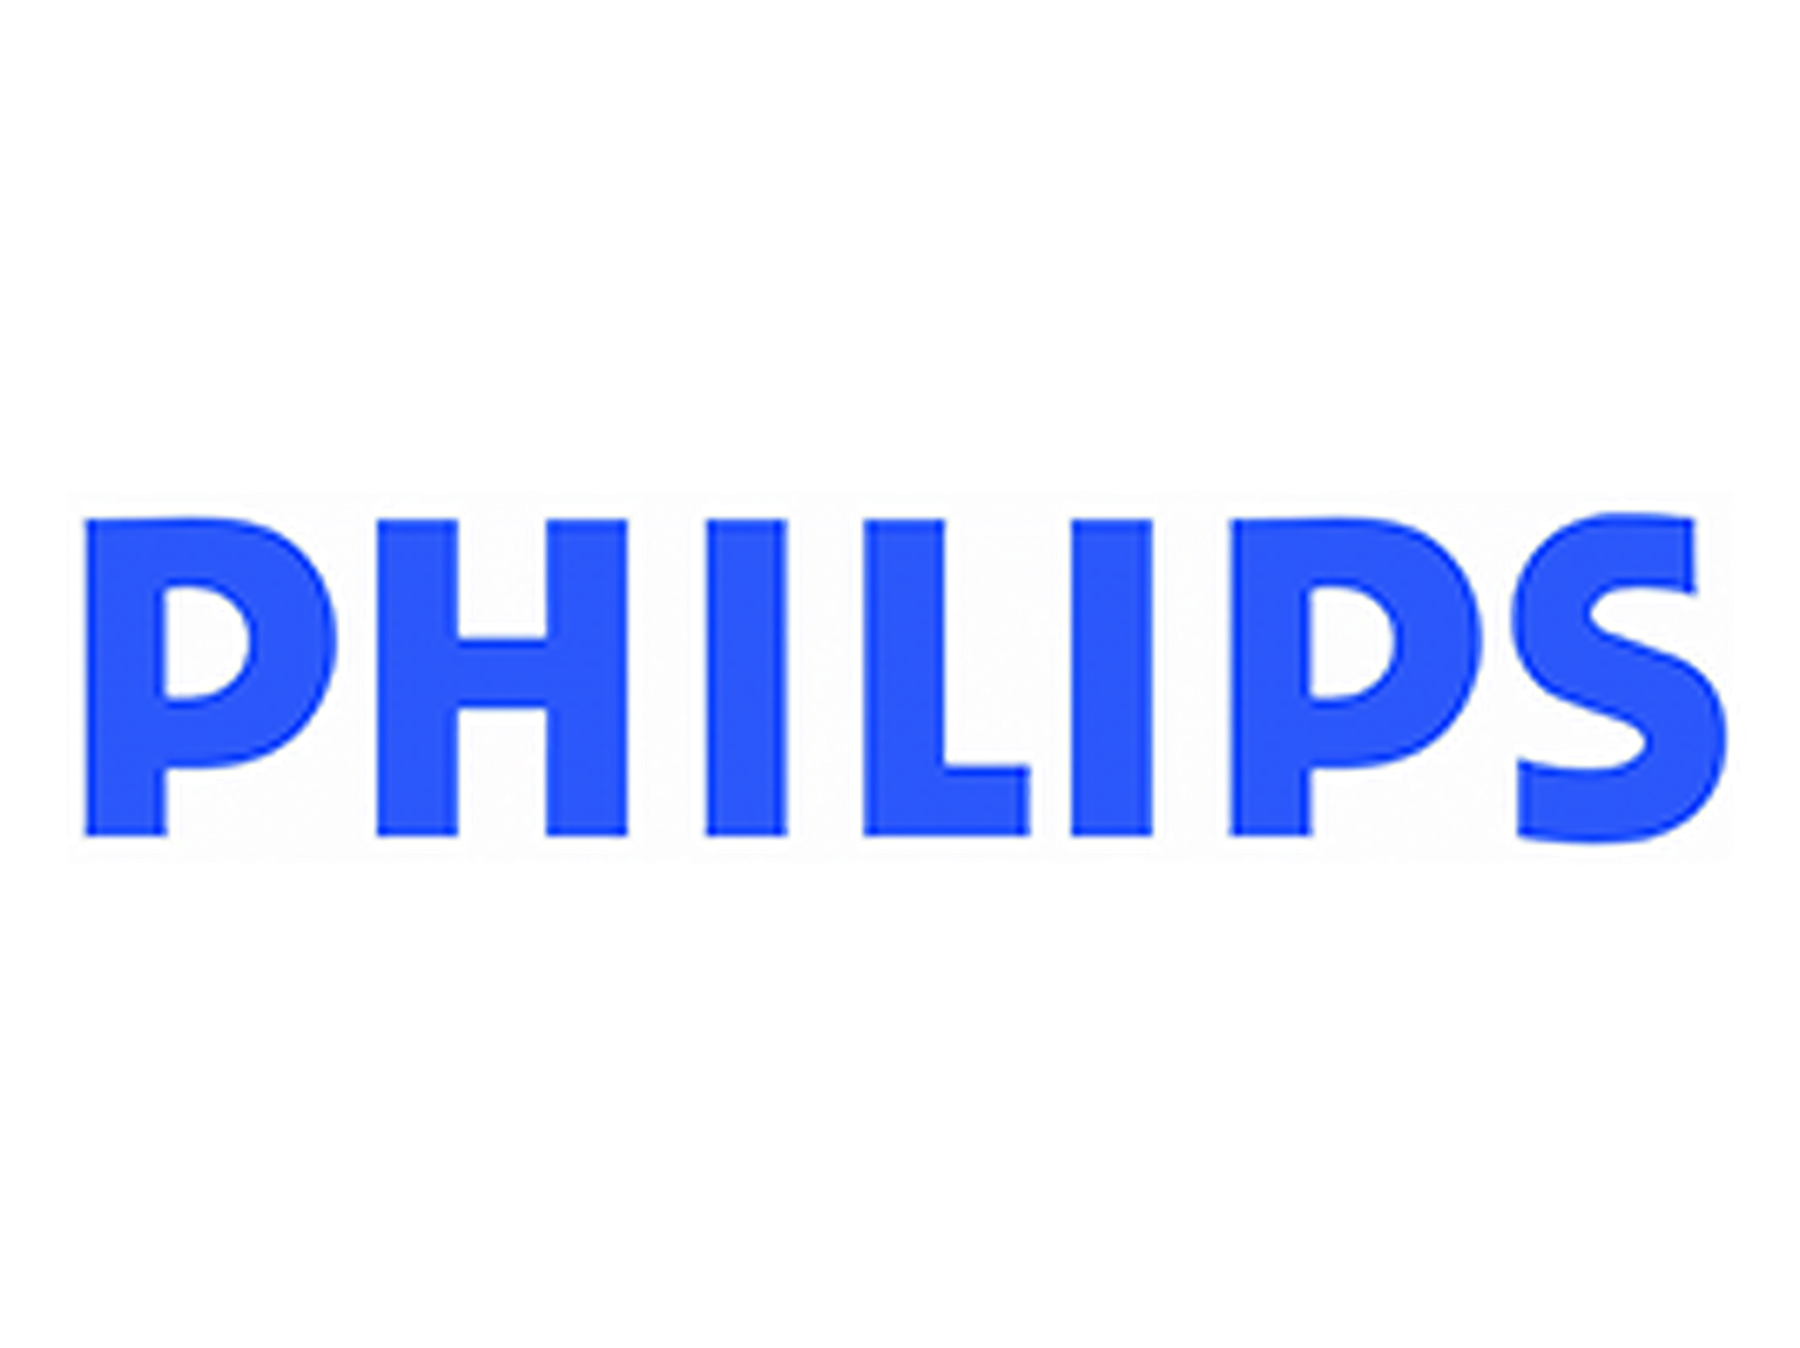 Philips rabatkoder